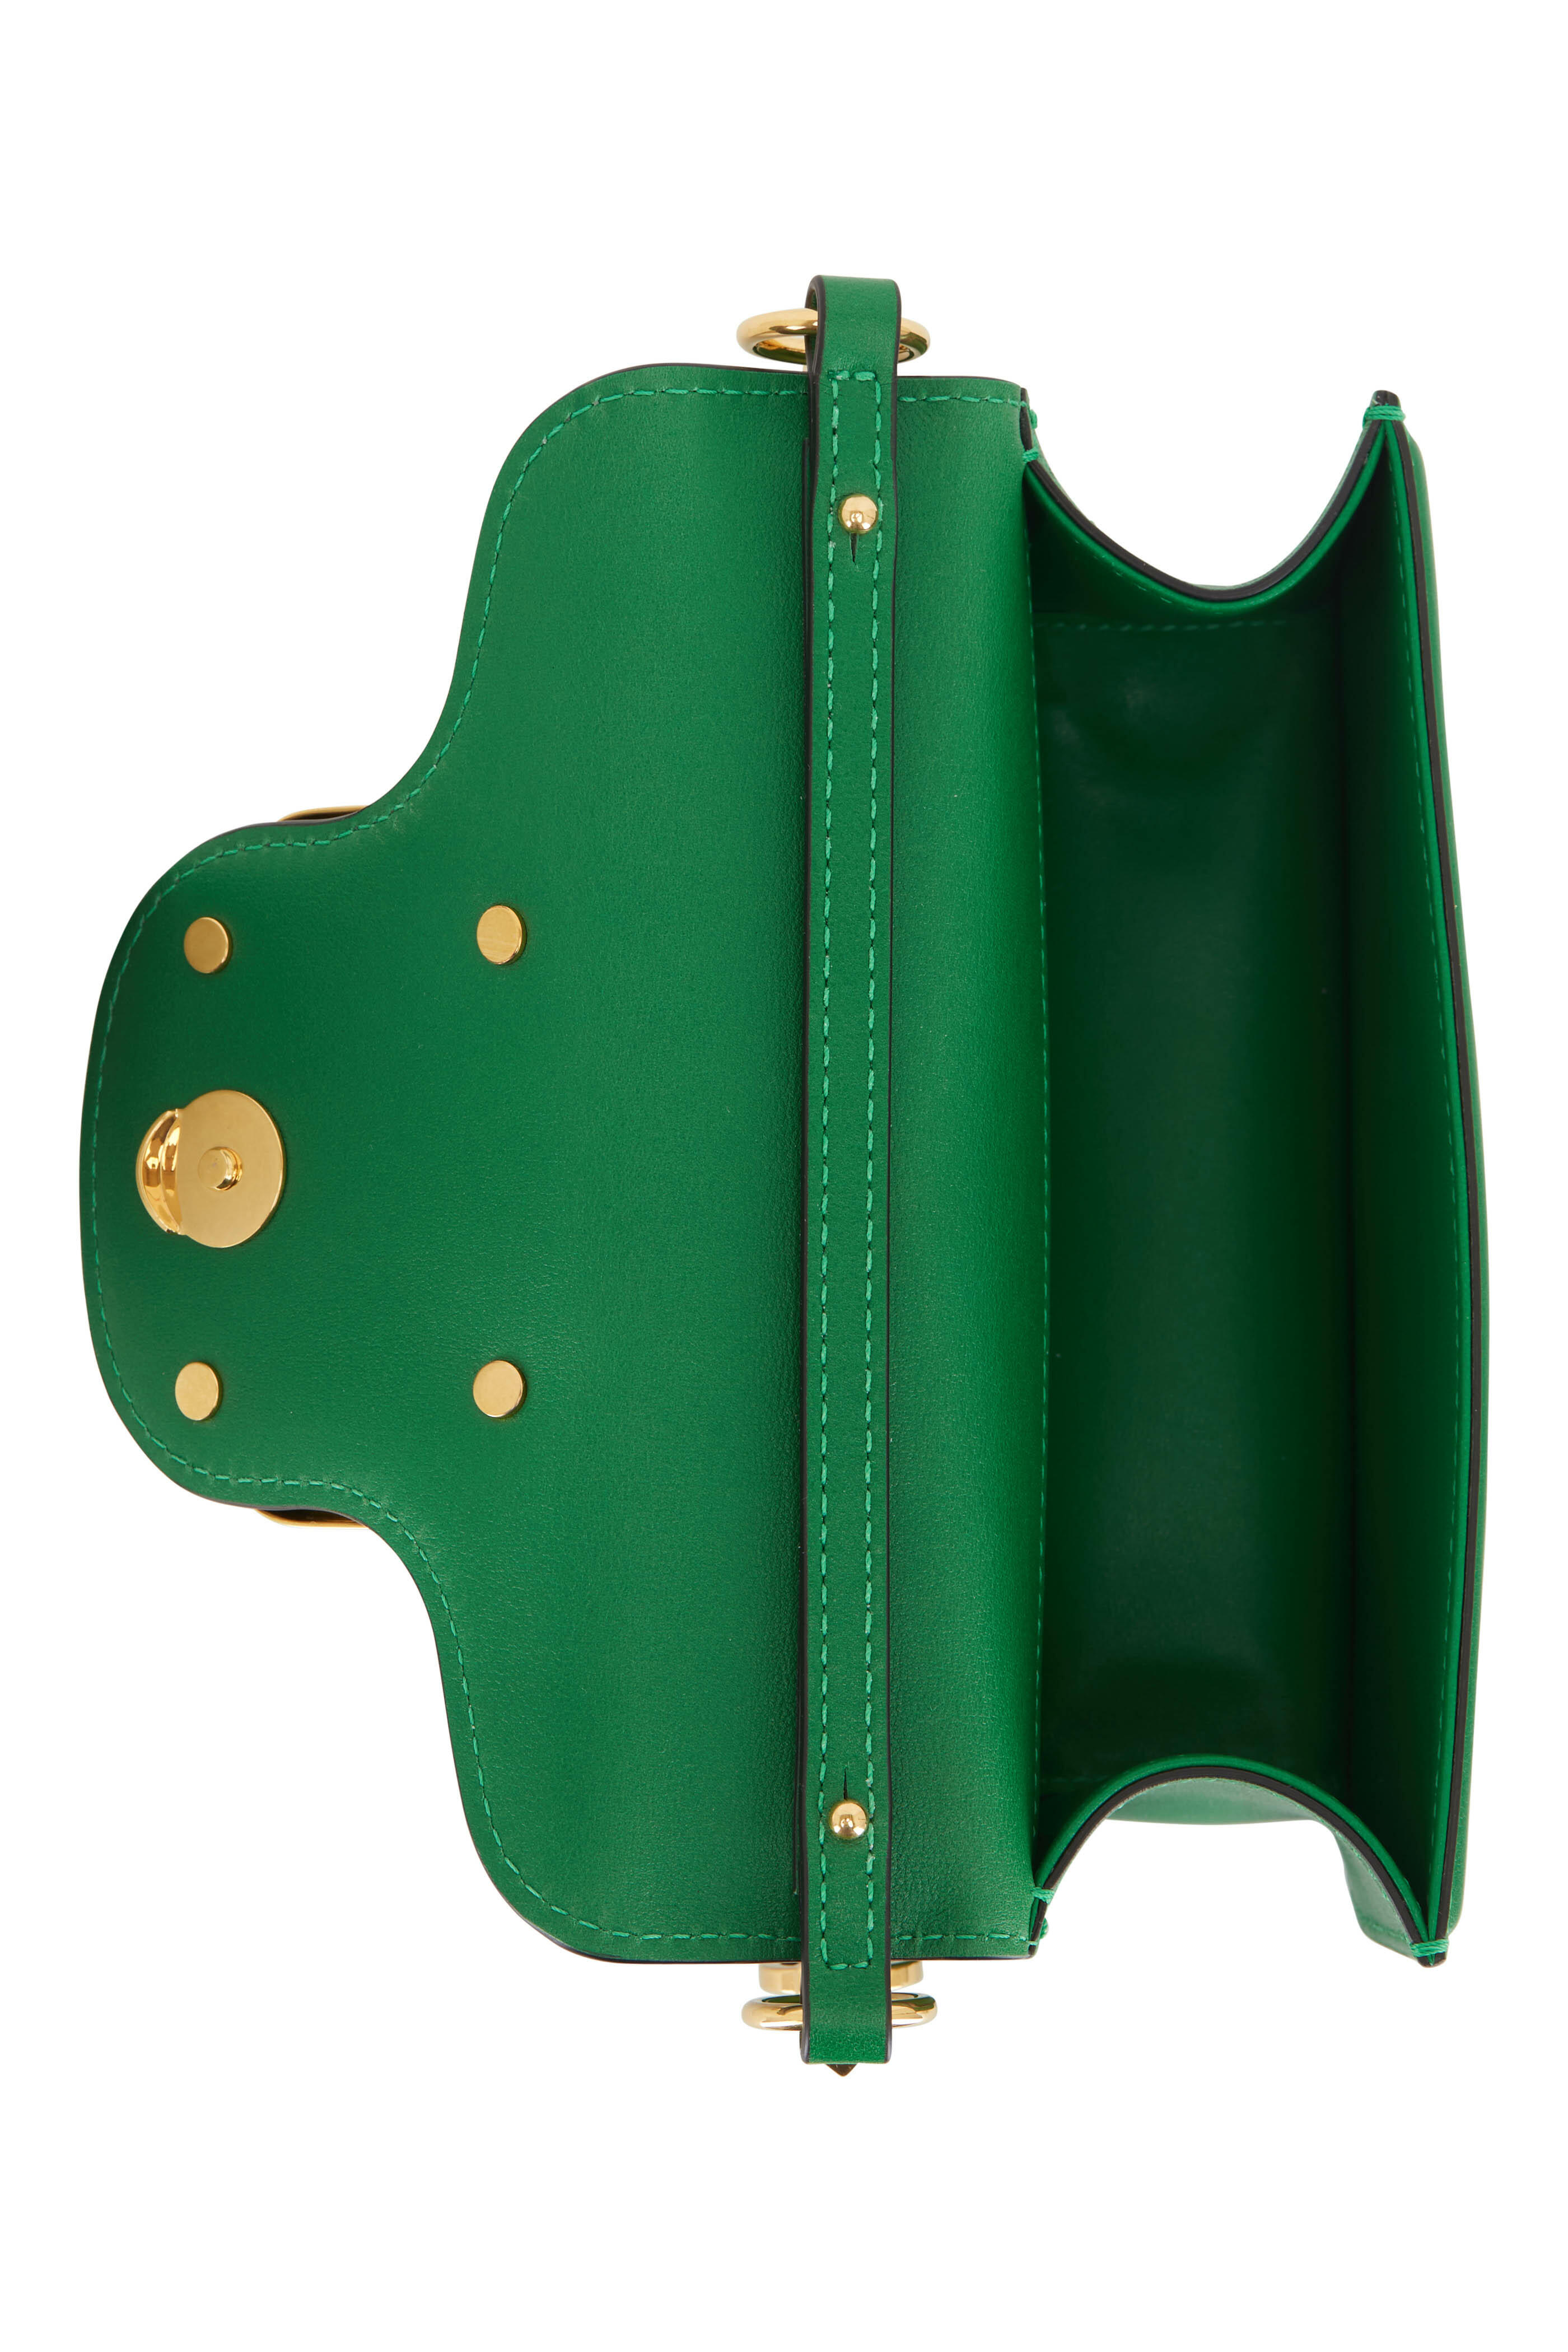 Valentino Garavani Locò Small Shoulder Bag In Calfskin in Green